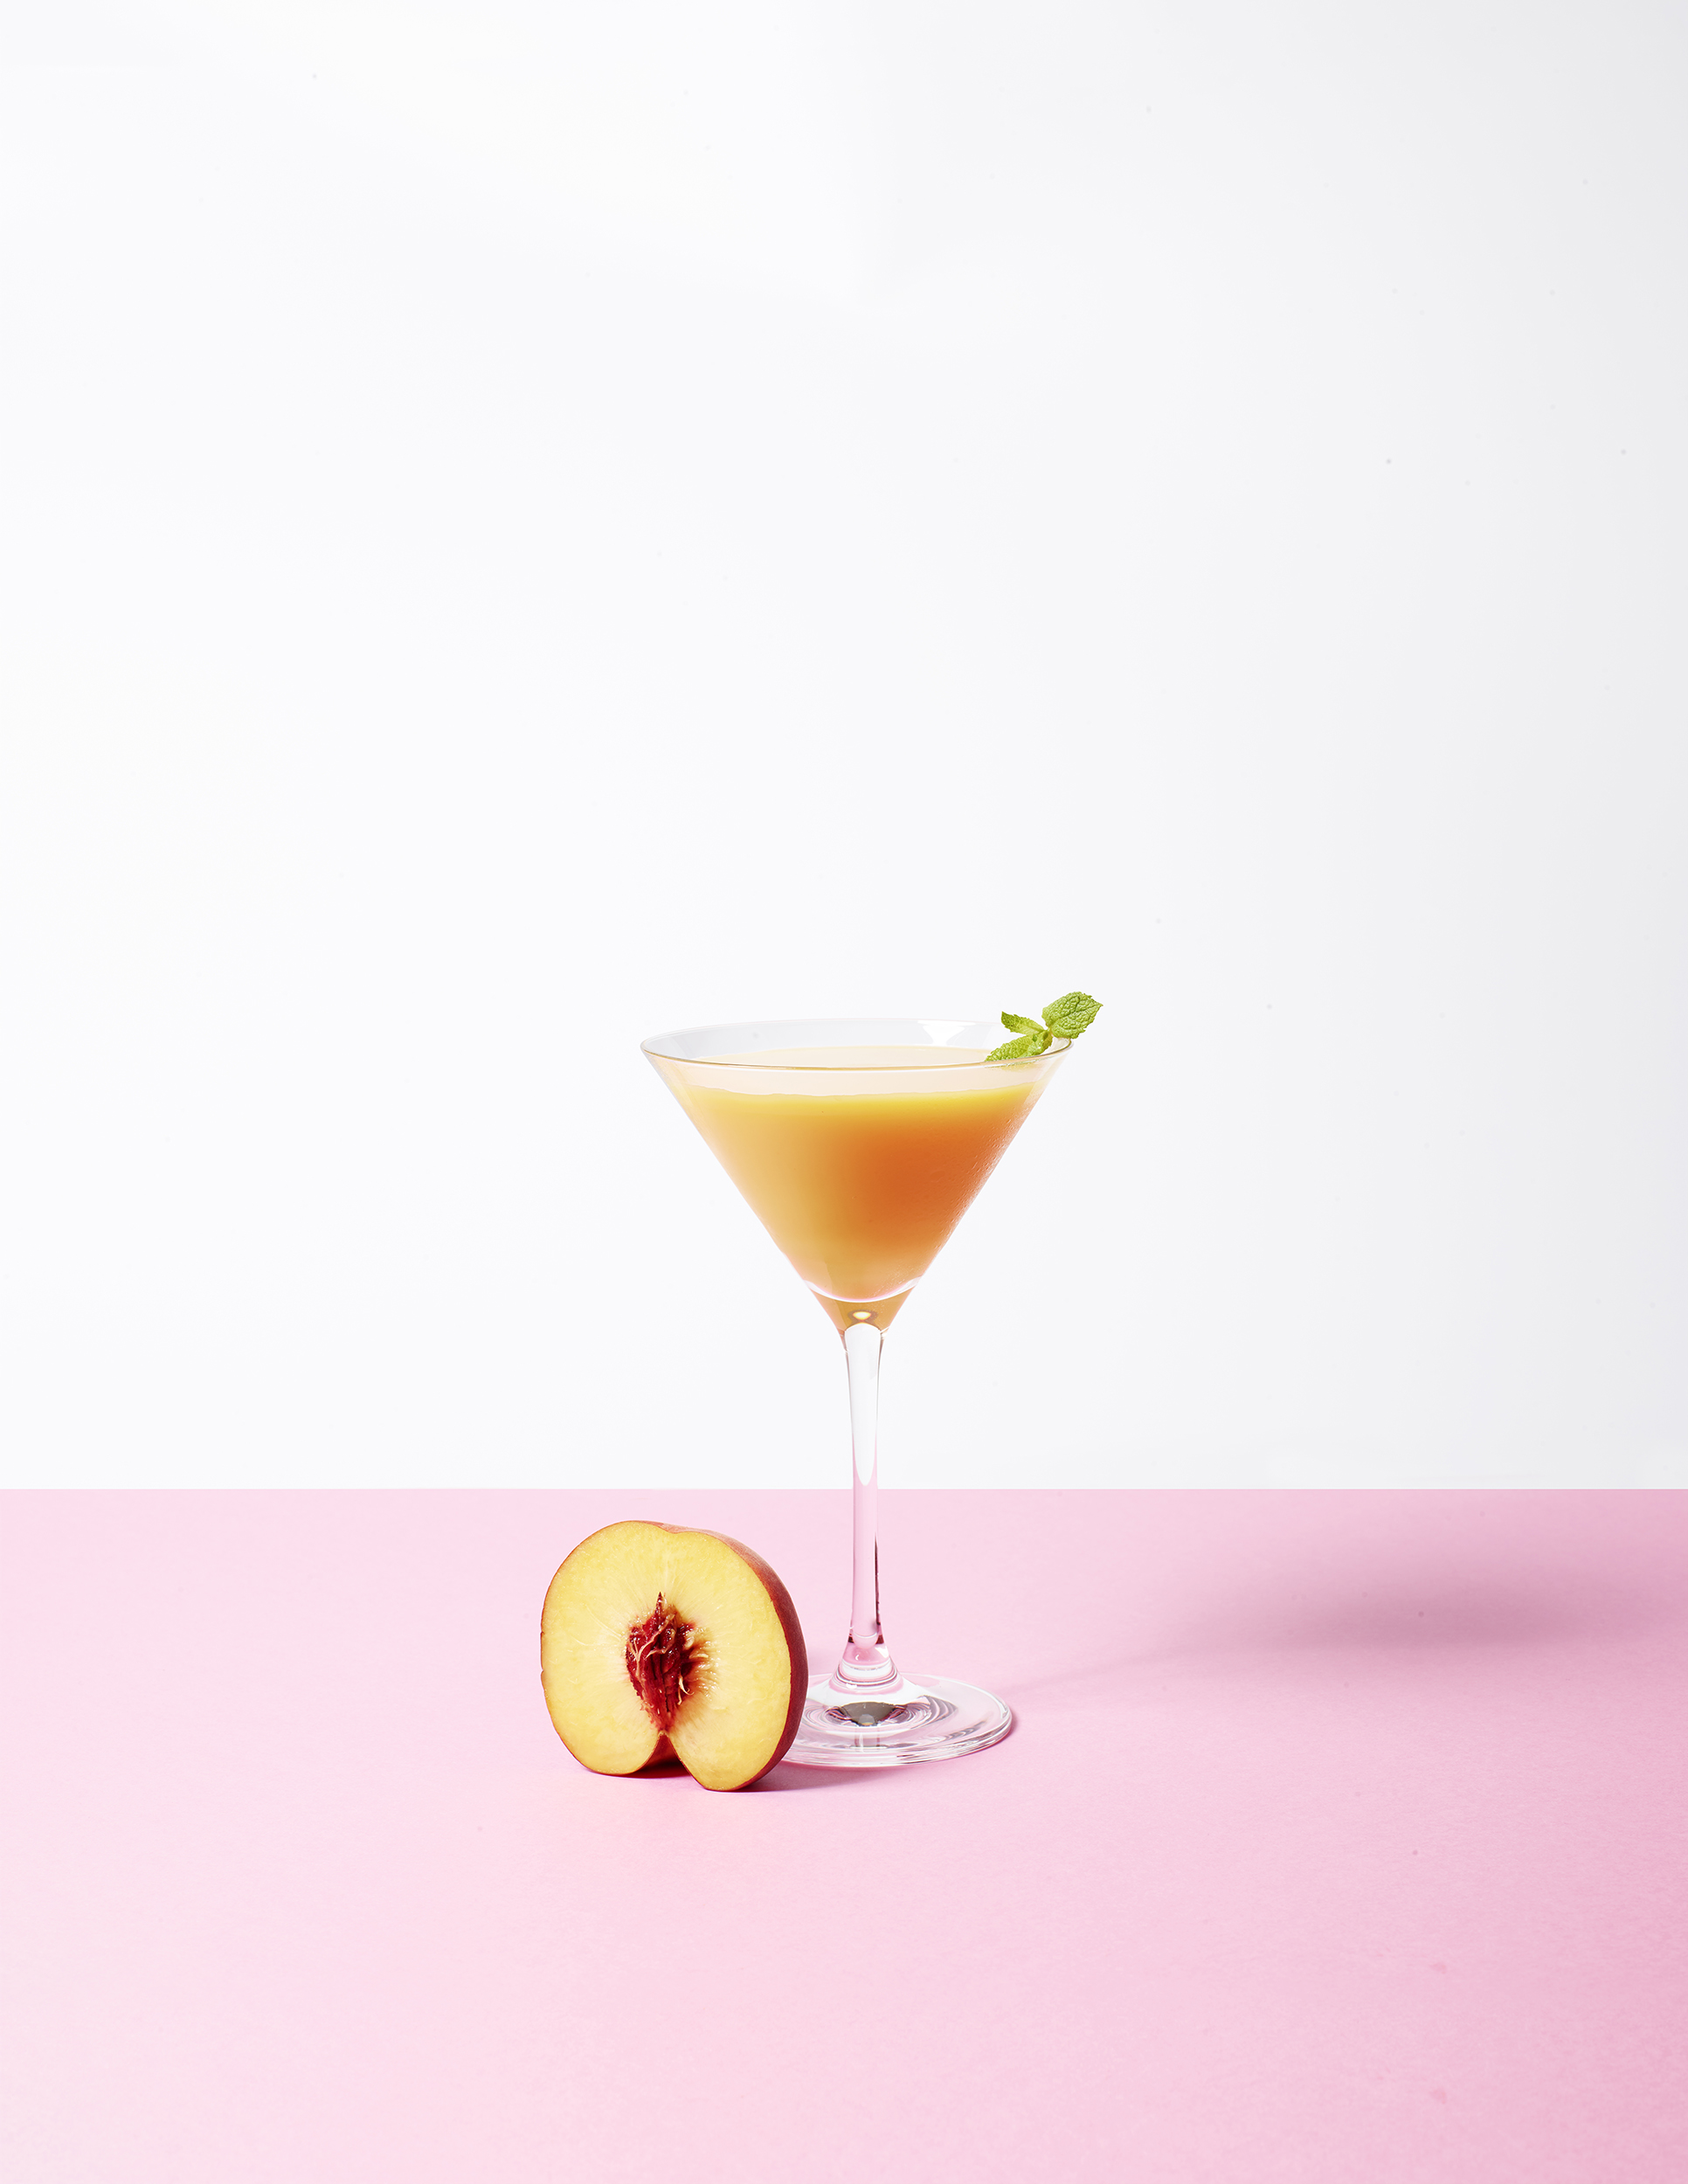 Chelsea Bloxsome | Food Photographer London peach daquari